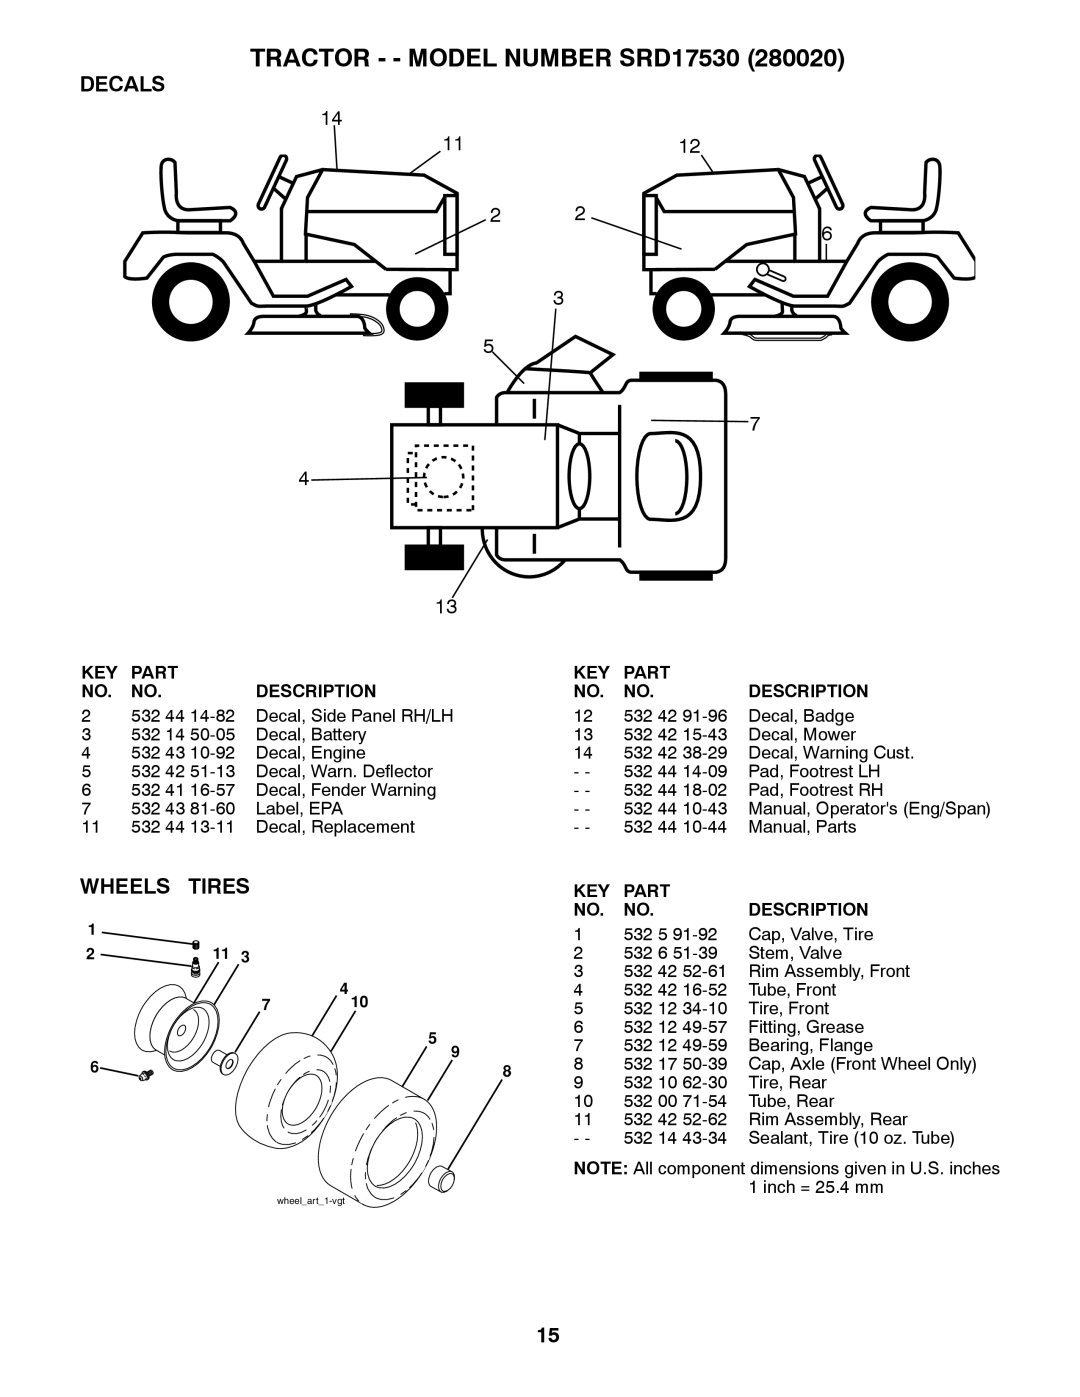 Husqvarna SRD17530 (280020) manual Wheels, TRACTOR - - MODEL NUMBER SRD17530, Decals, Tires, wheelart1-vgt 